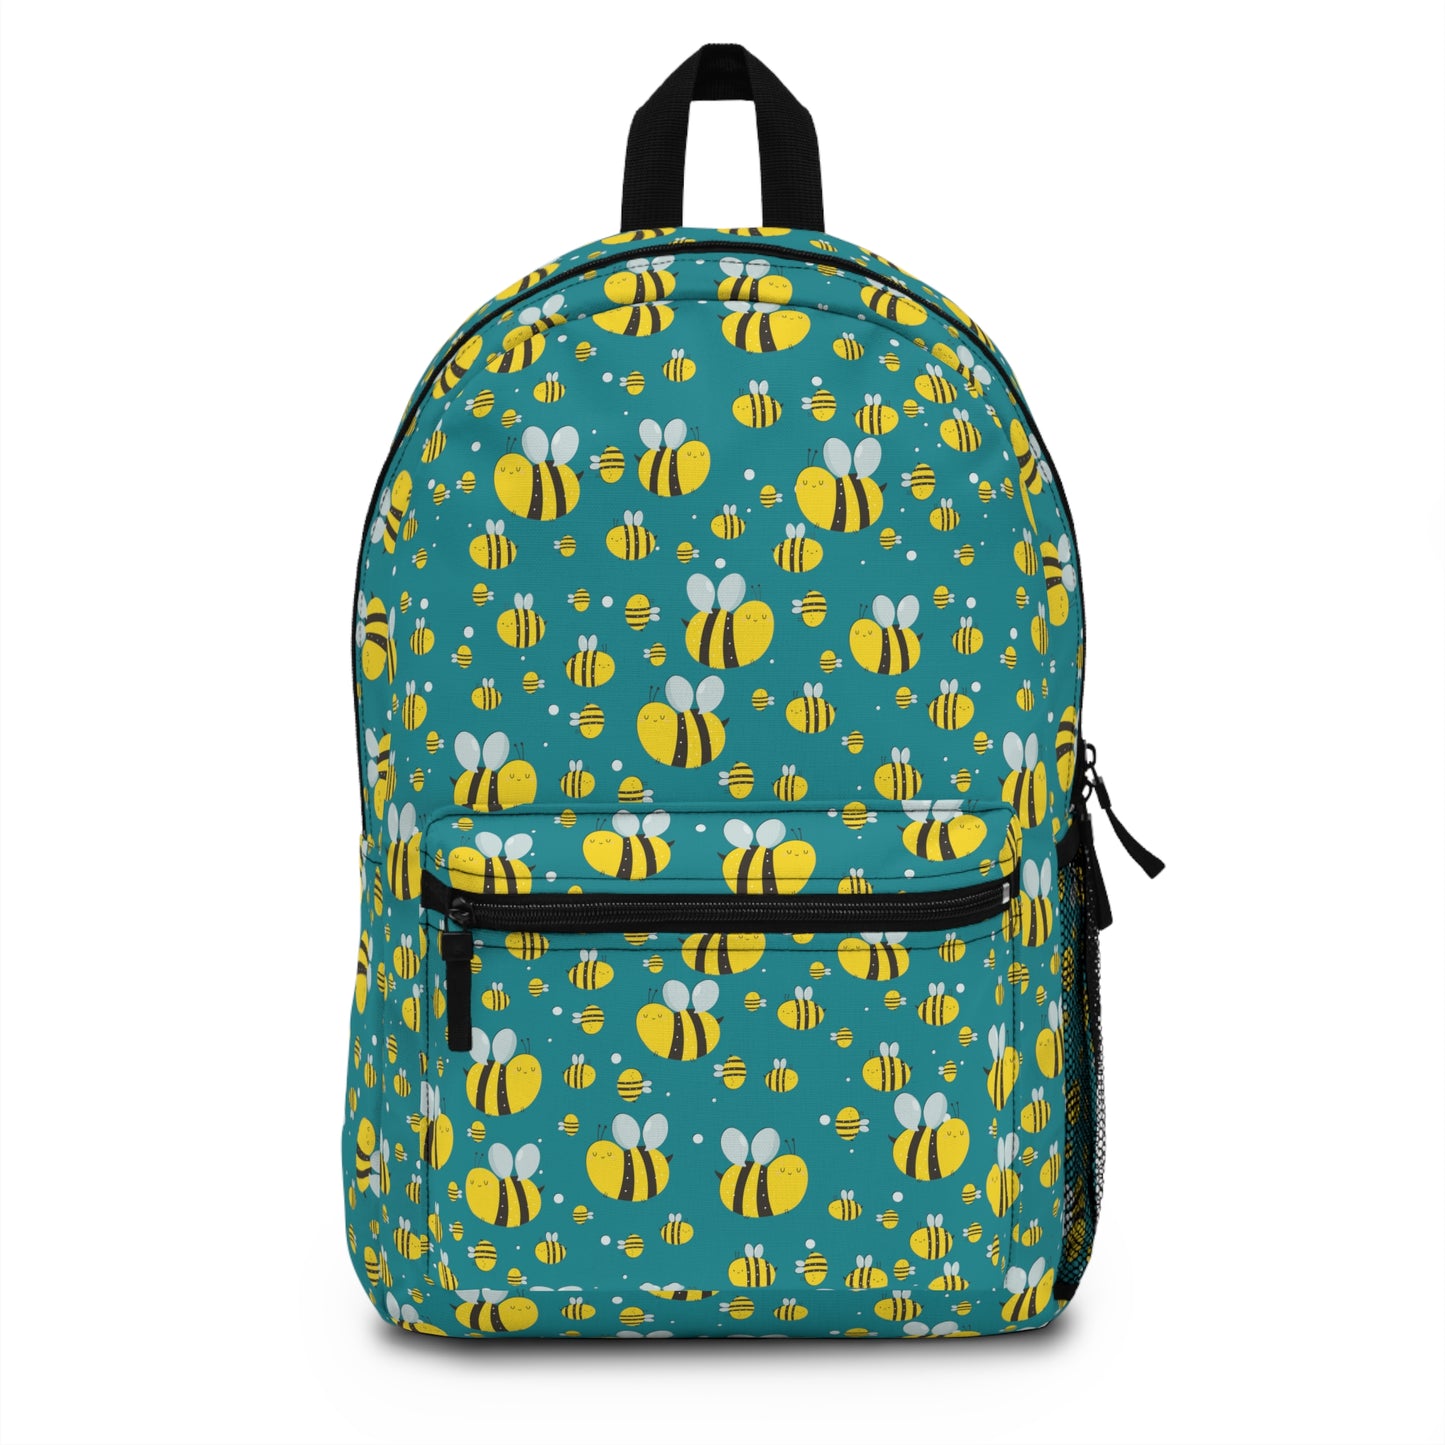 Lots of Bees - Aqua 008E97 - Backpack